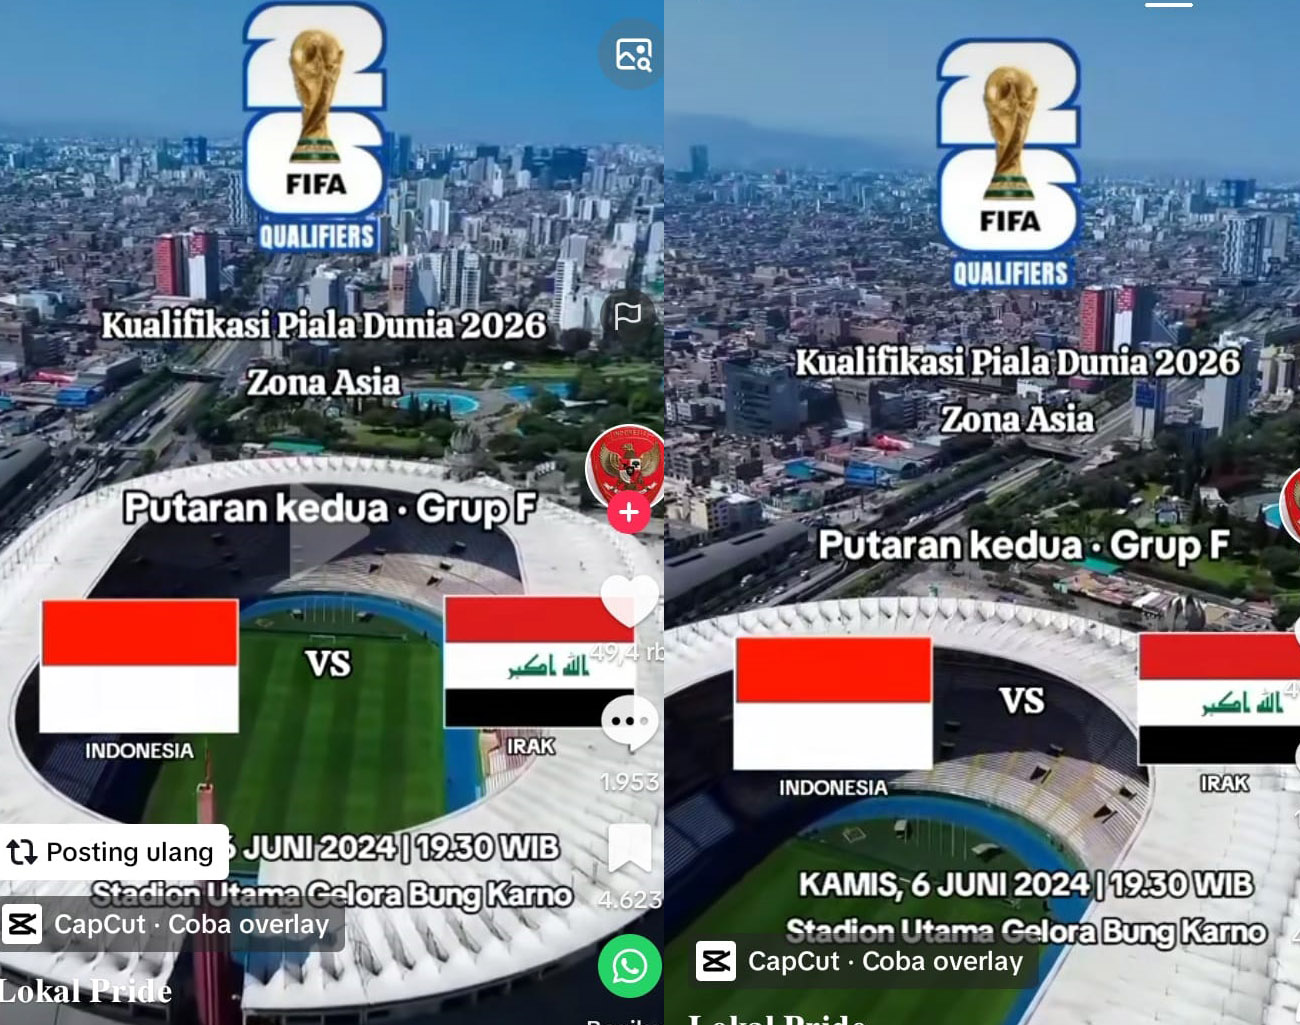 Misi Balas Dendam, Irak vs Indonesia Bertemu Kualifikasi Piala Dunia 2026 di Stadium Gelora Bung Karno Jakarta